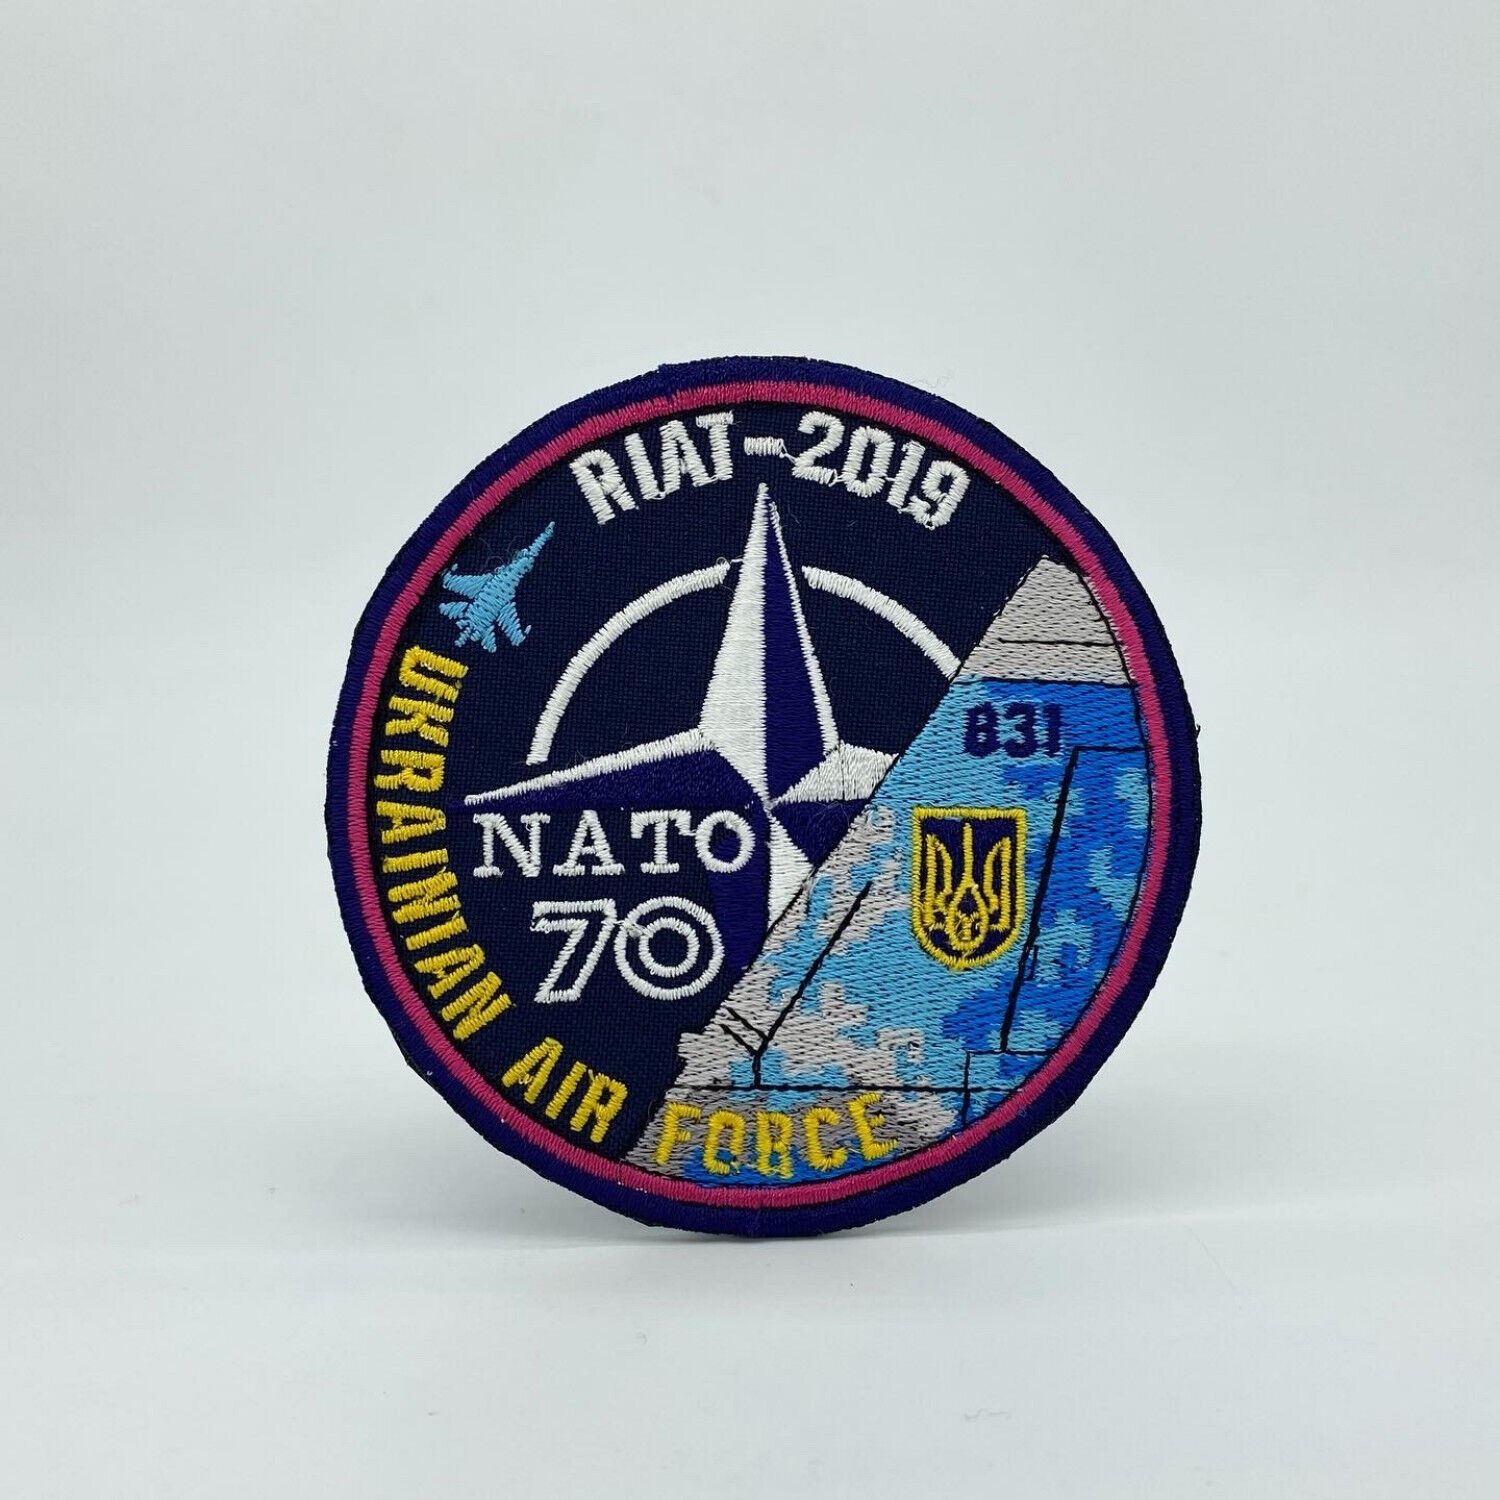 NATO Riat 2019 UAF Aviation Patch Aircraft Patch Ukrainian Air Force.